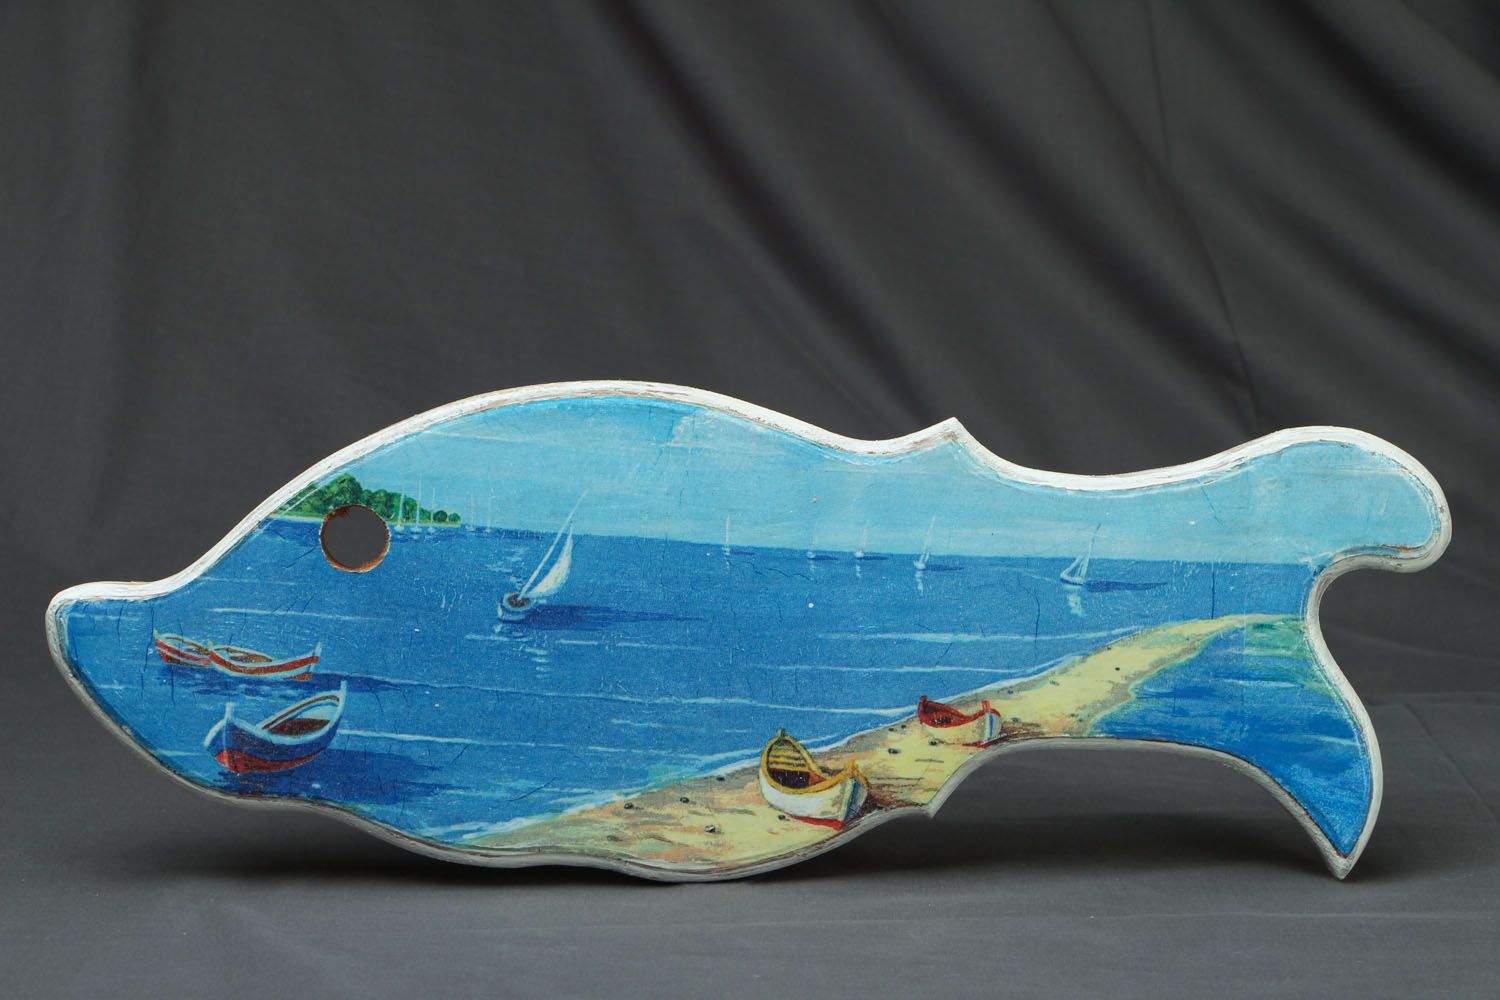 Fish-shaped cutting board photo 1